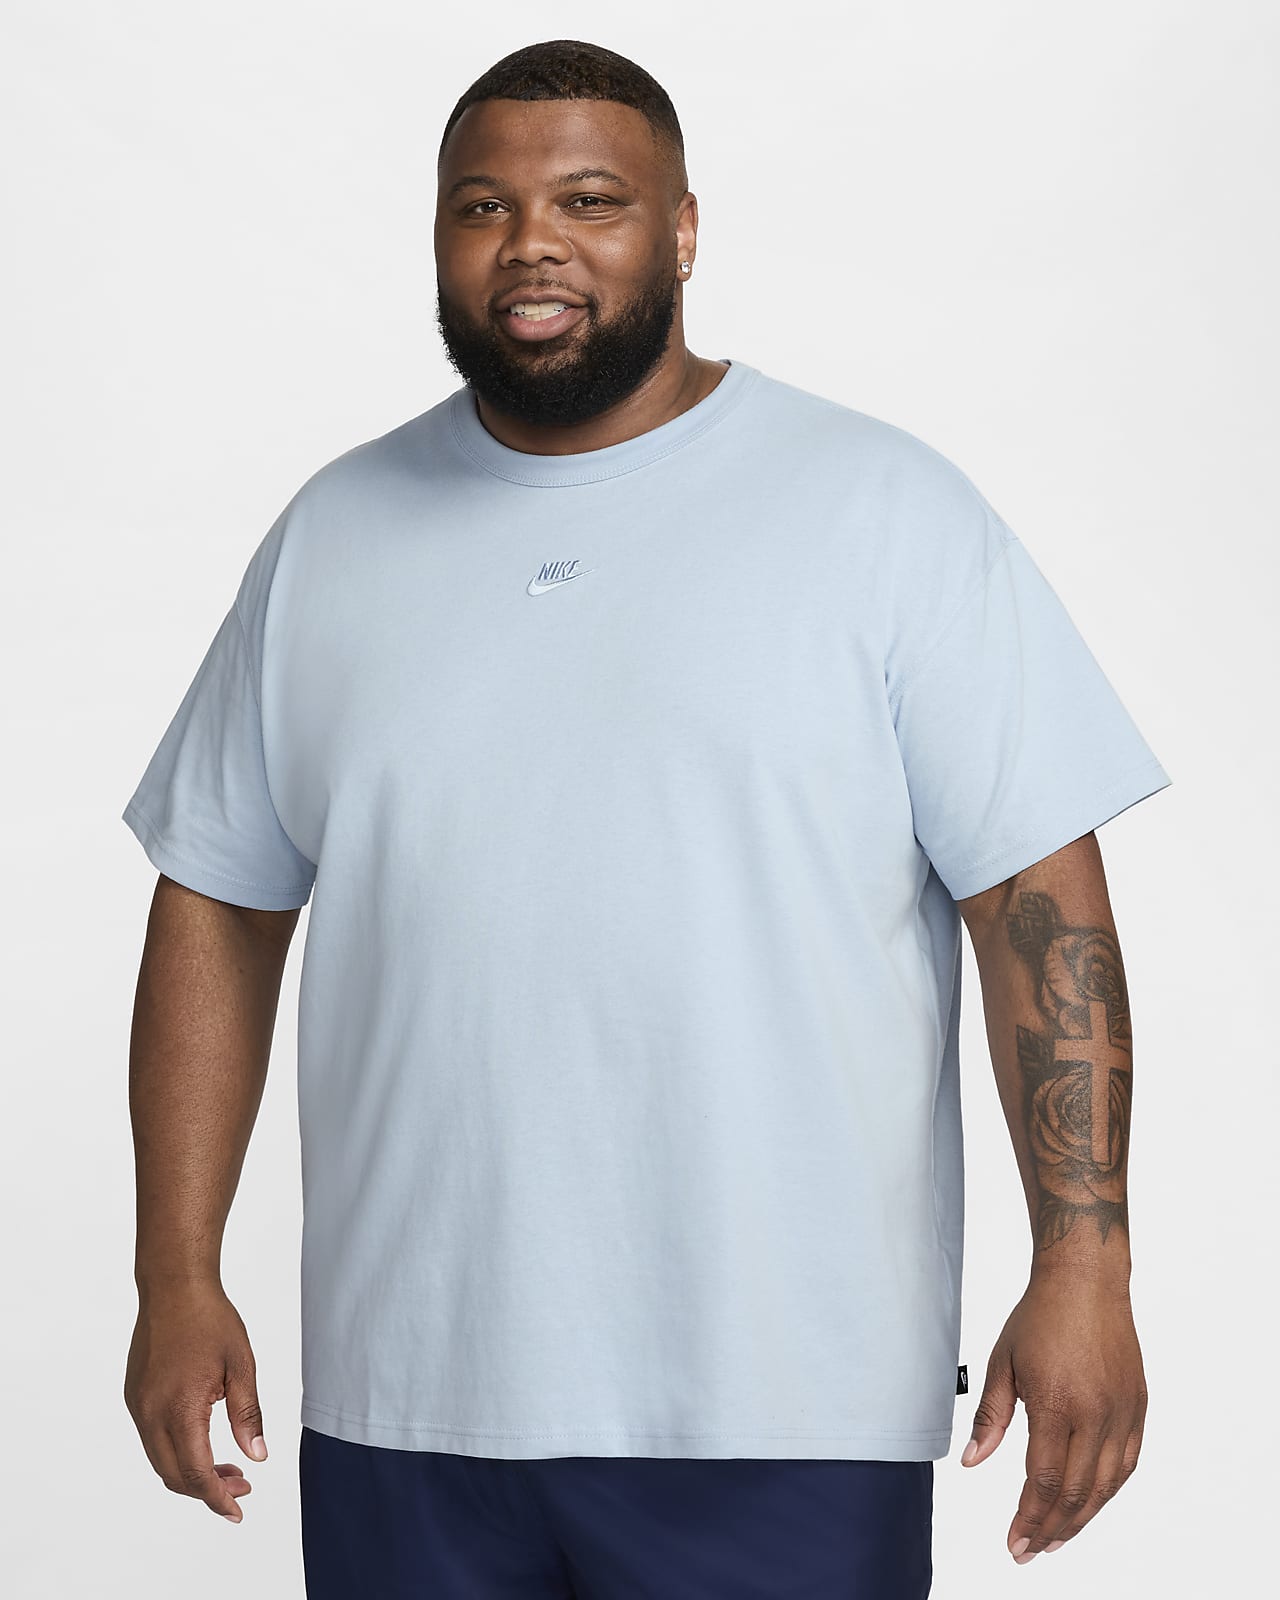 Nike Sportswear Premium Essentials Men's Long-Sleeve Pocket T-Shirt.